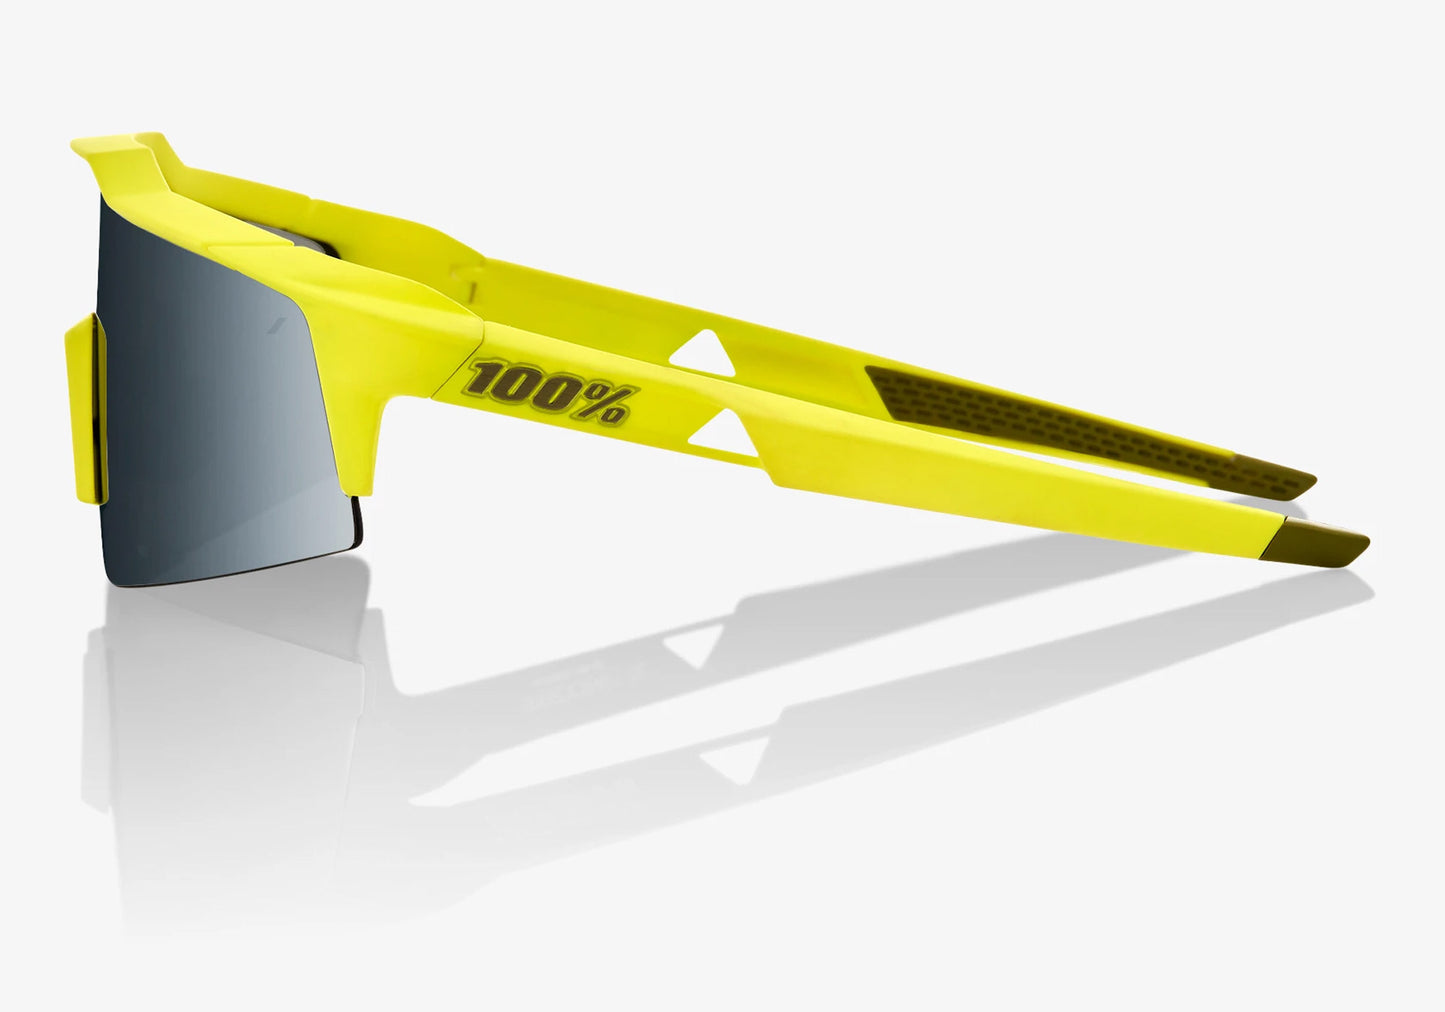 100% Speedcrsaft SL Soft Tact Banana with Black Mirror Lens Cycling Sunglasses